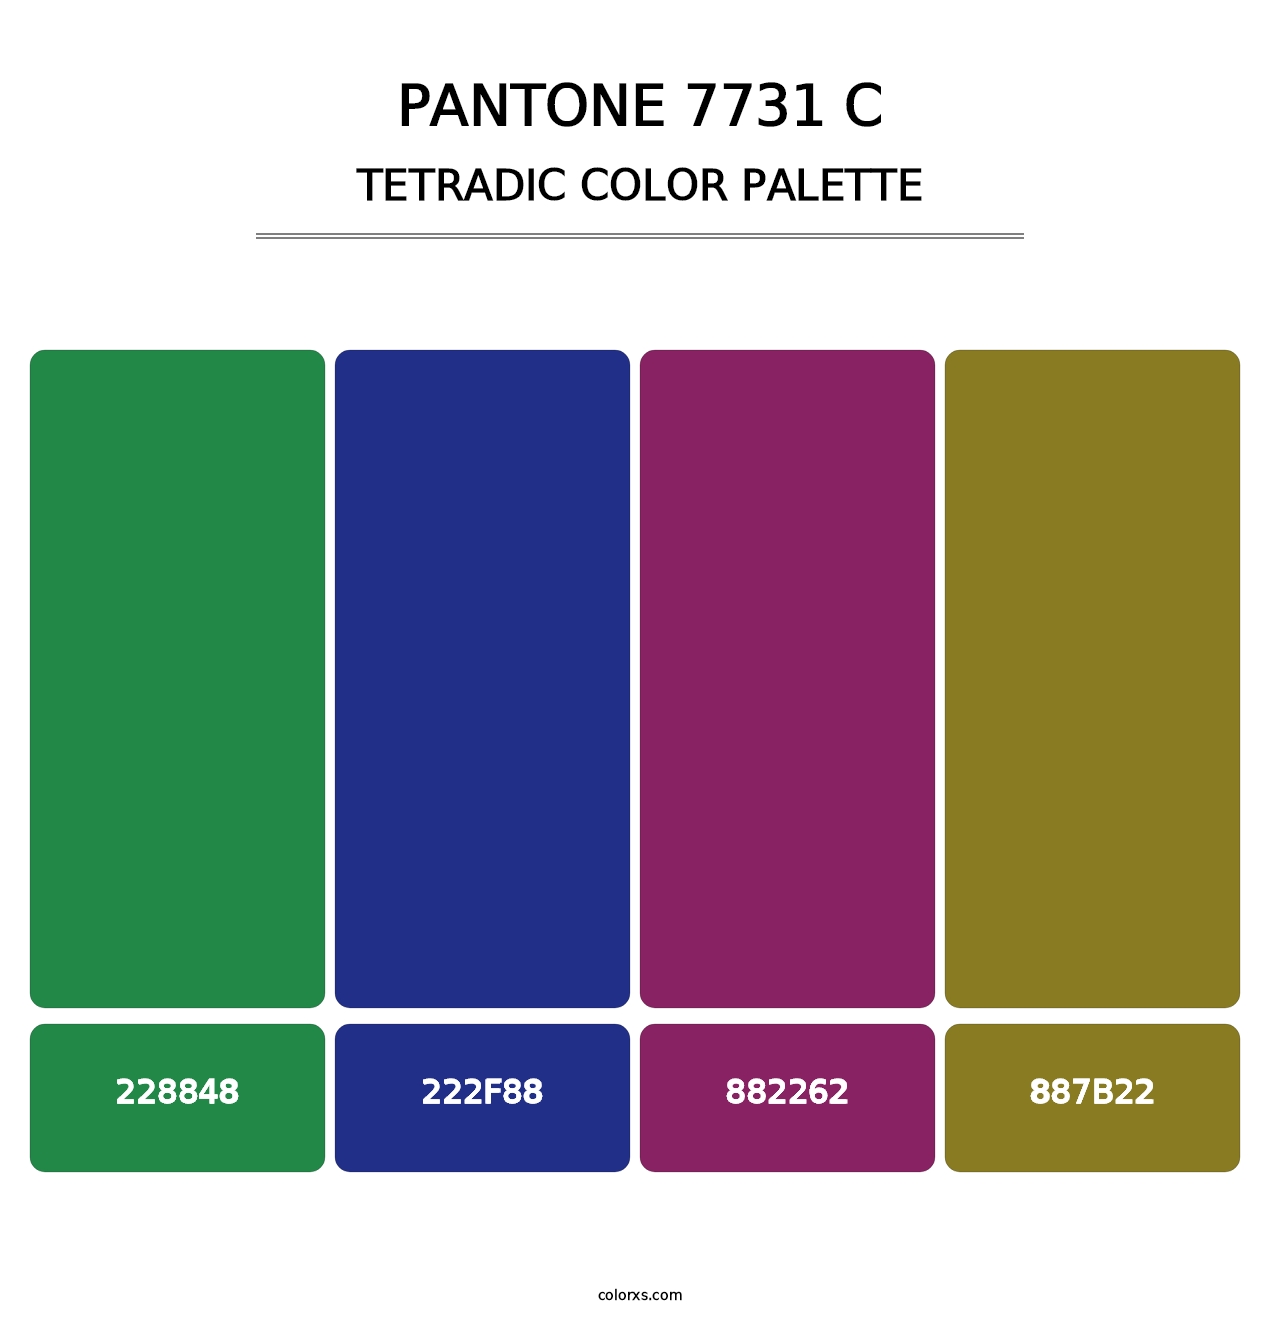 PANTONE 7731 C - Tetradic Color Palette